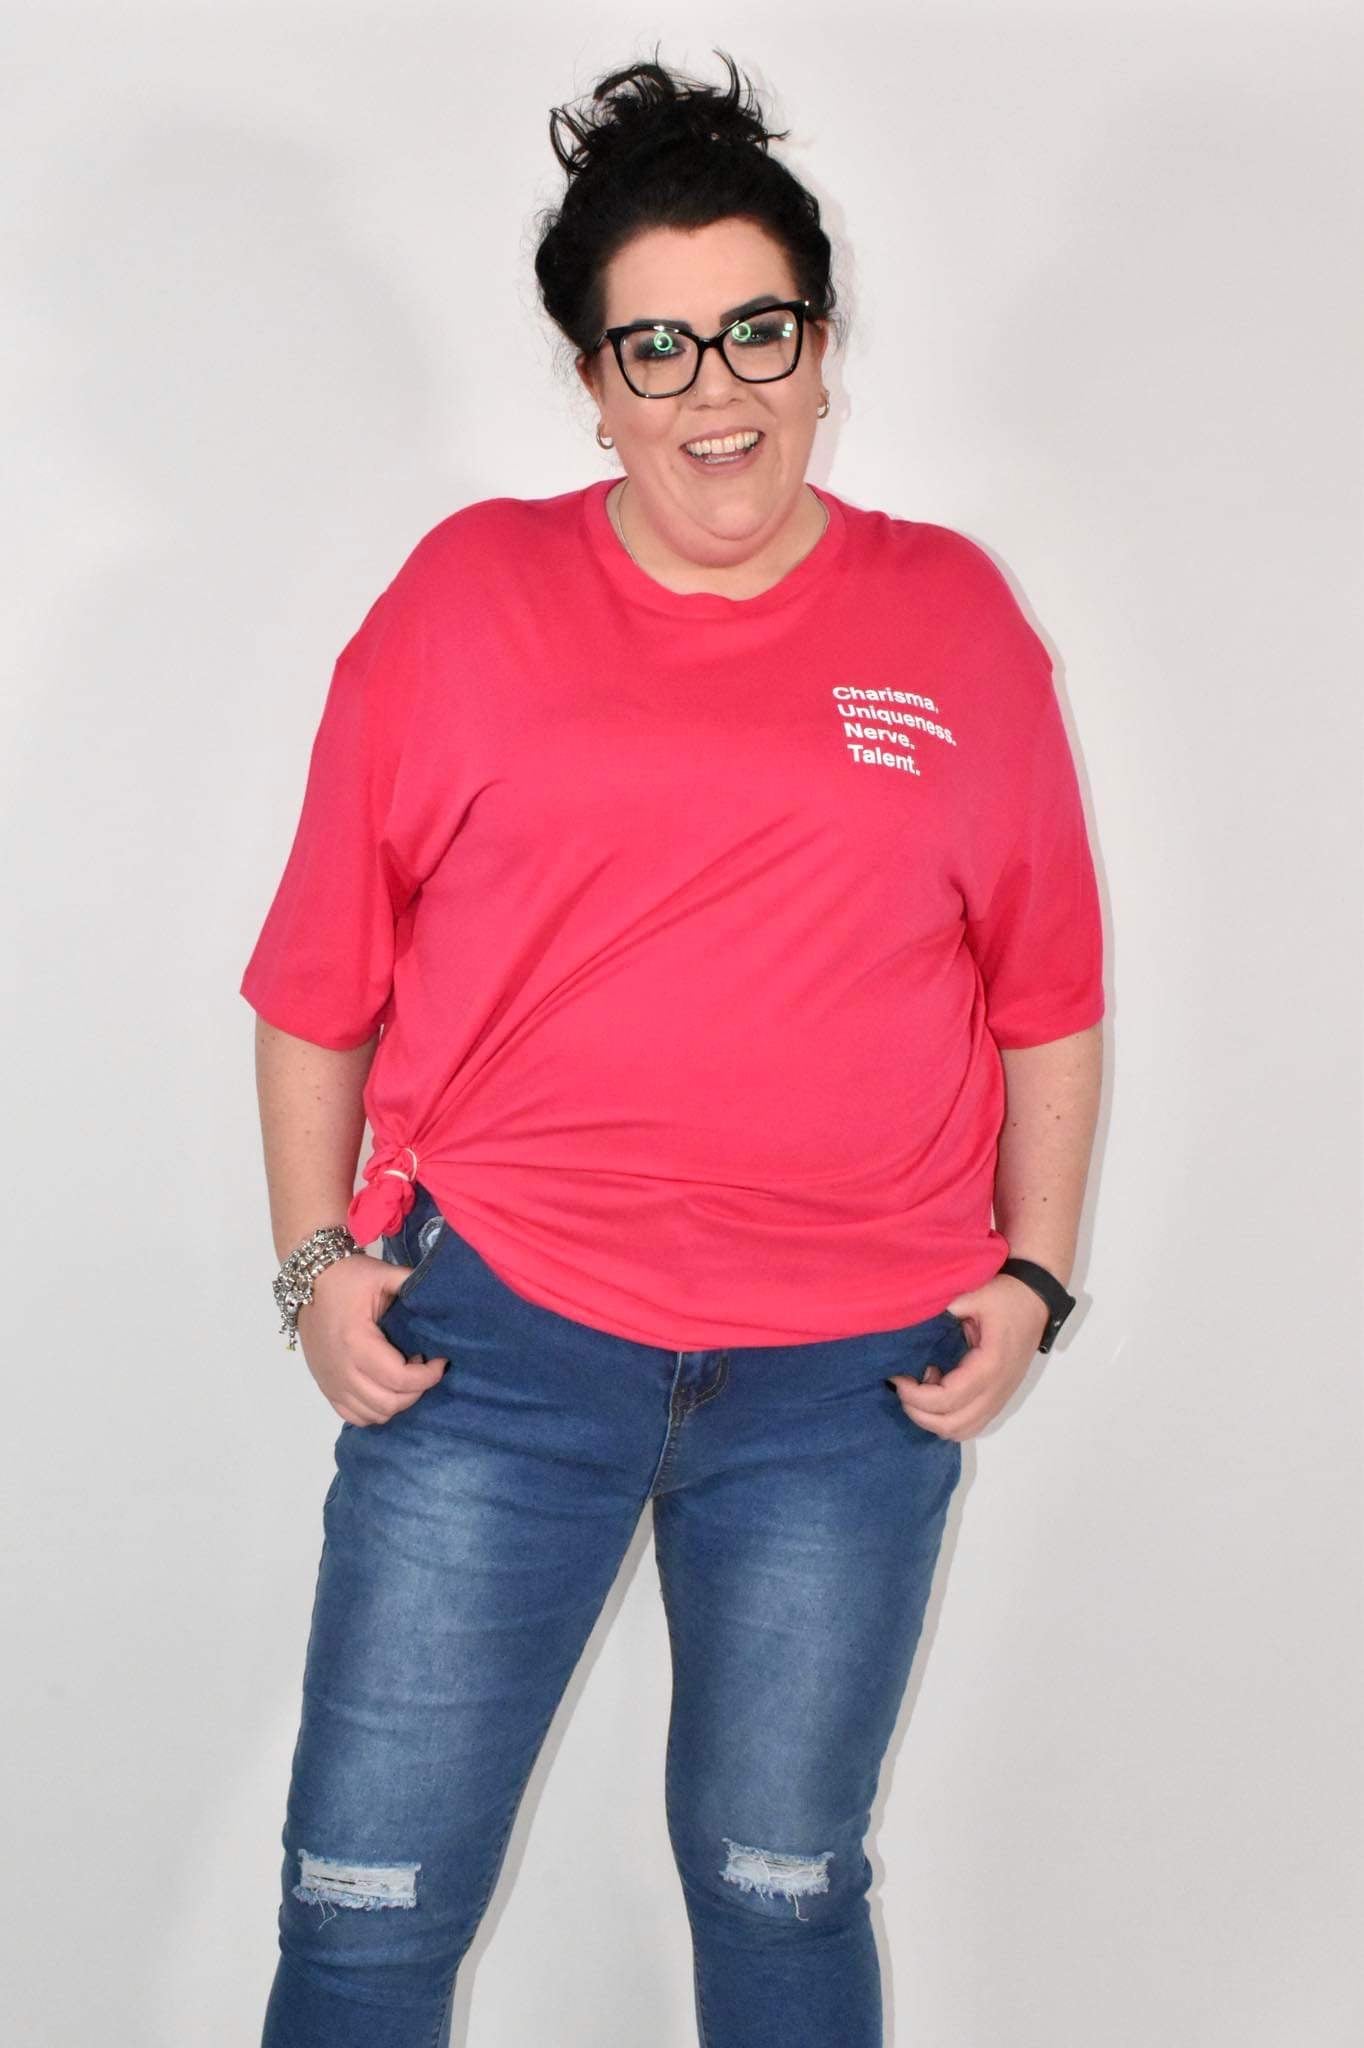 Hot Pink "Charisma" Unisex Slogan T-Shirt